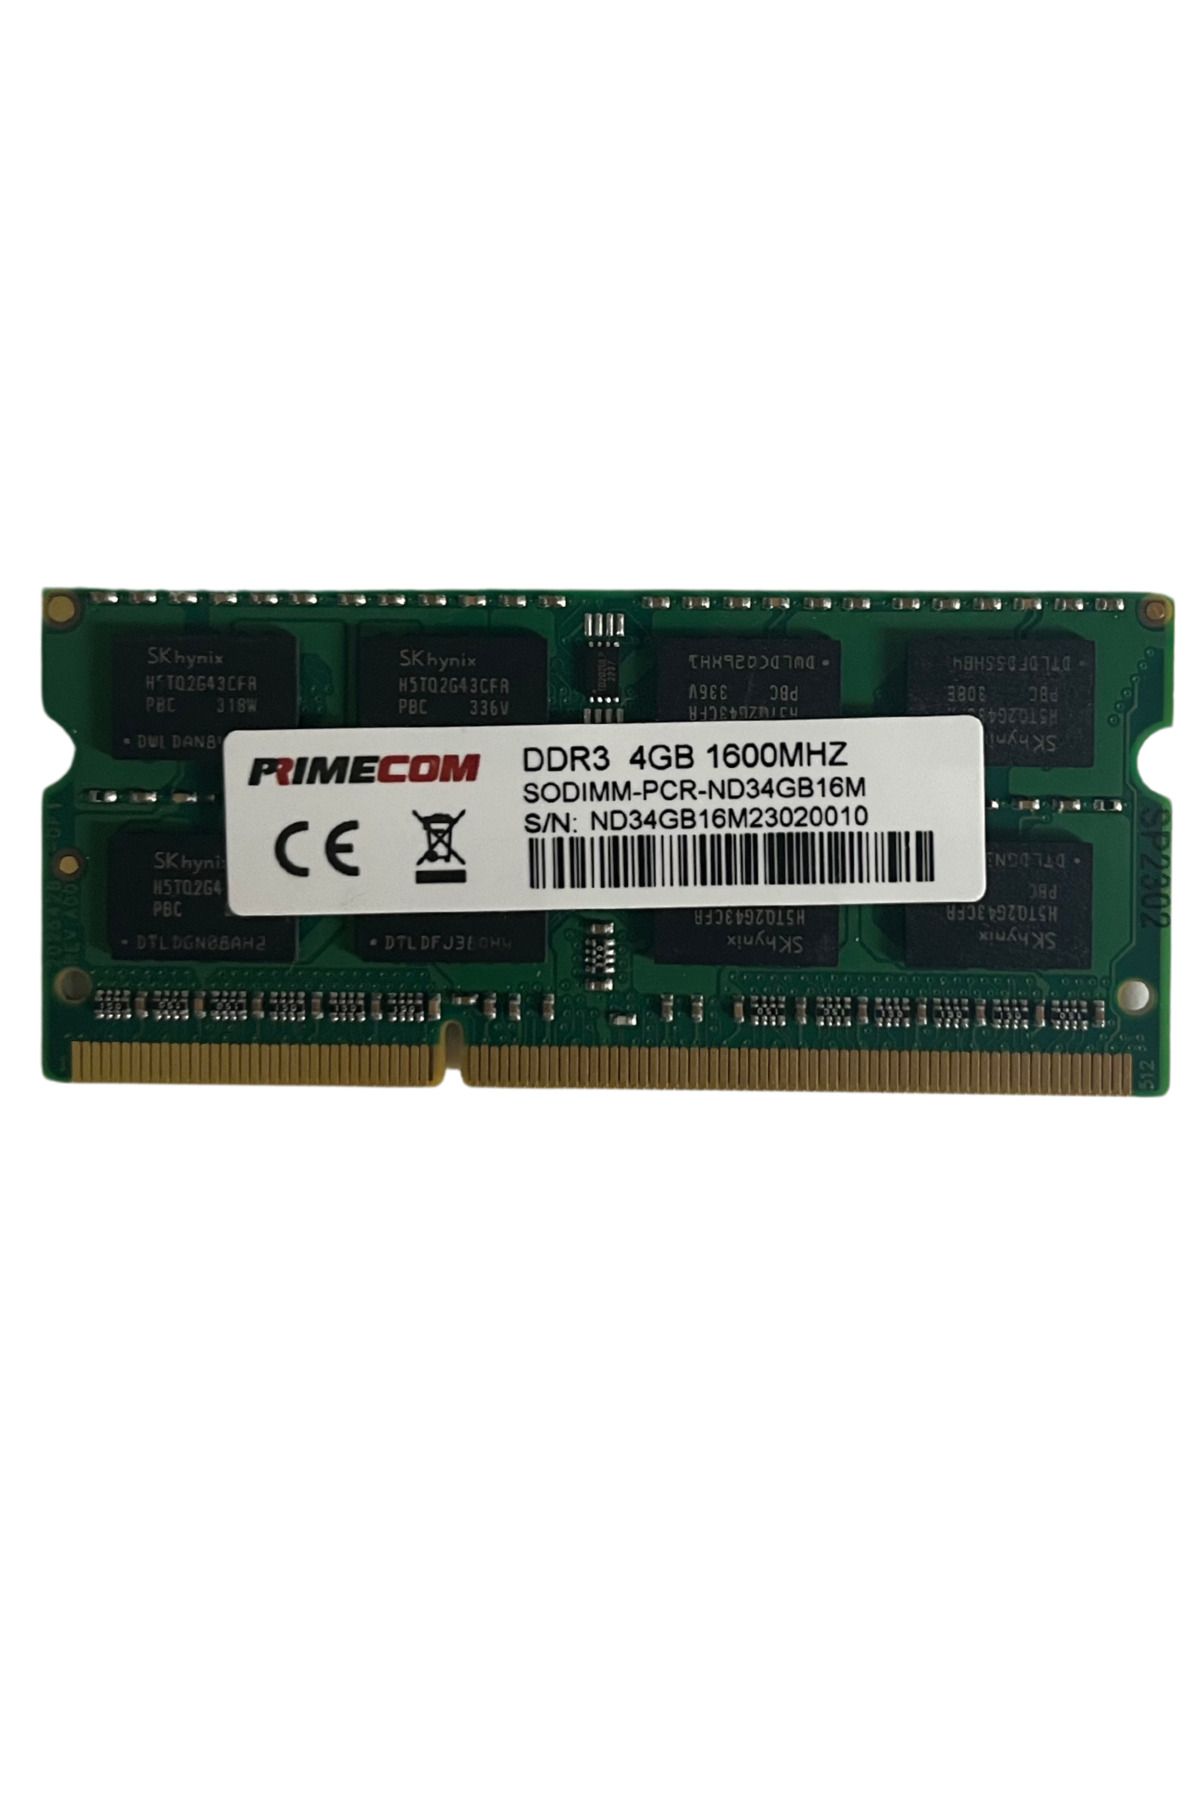 Primecom PCR-ND34G16M 4GB 1600MHz DDR3 204p SODIMM